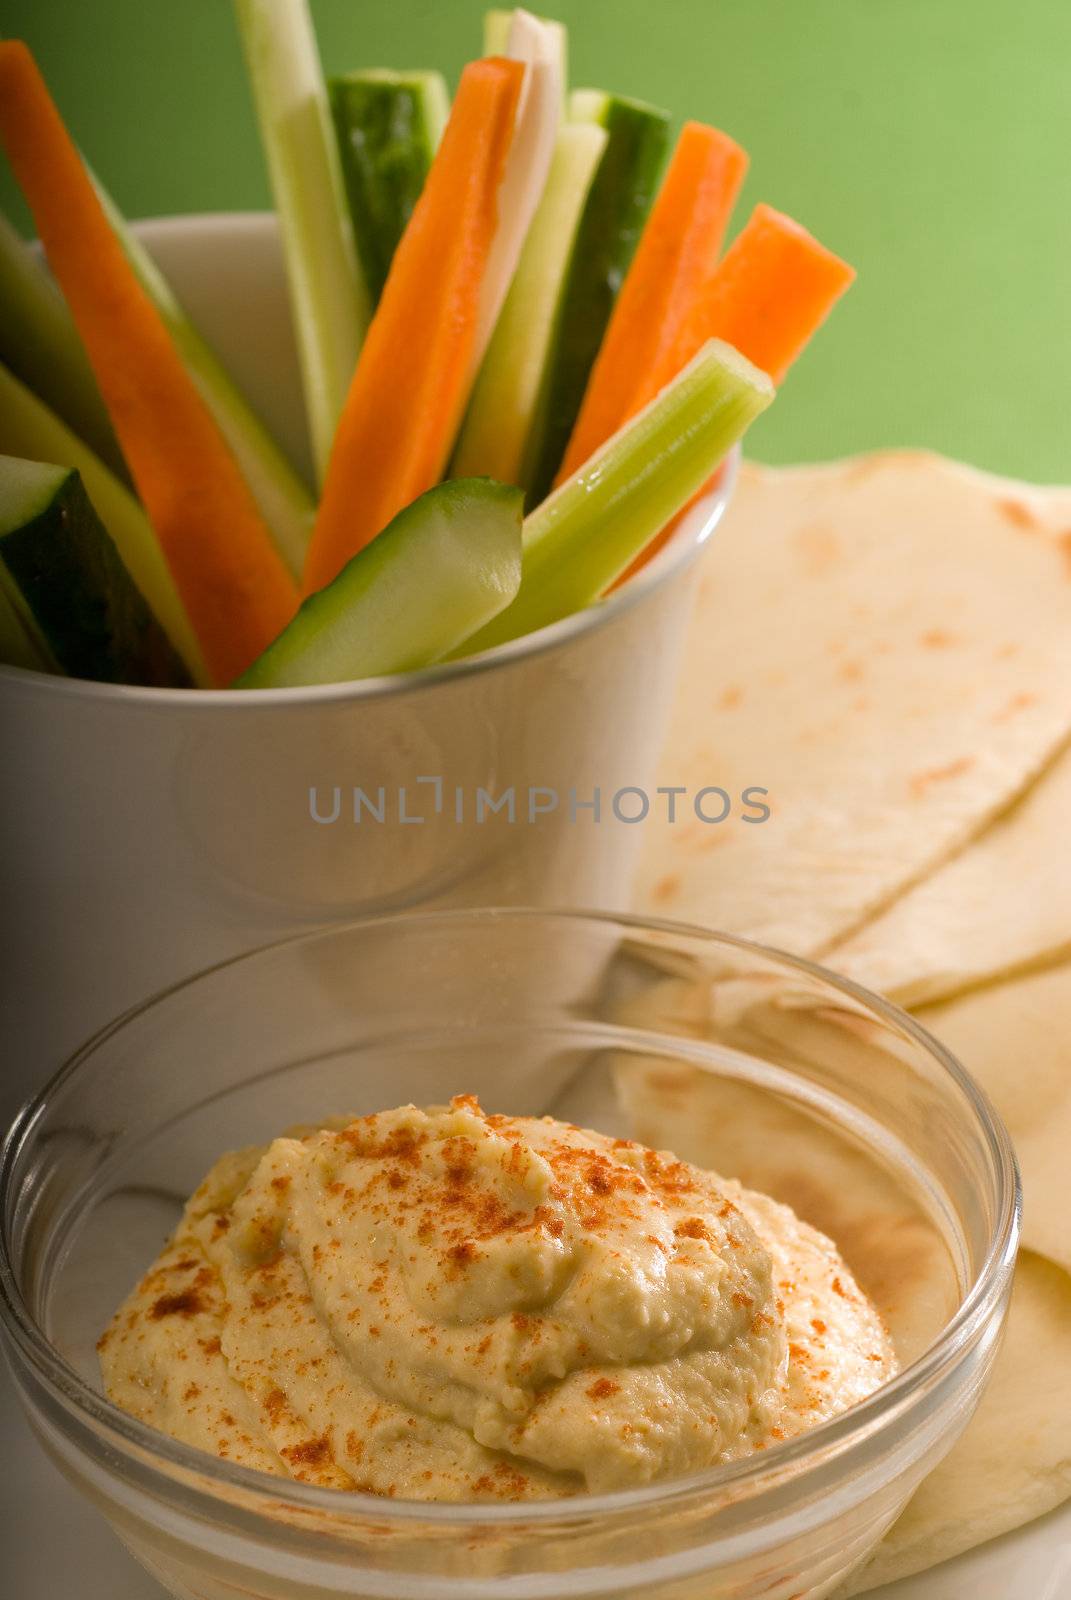 hummus dip with pita bread and vegetable by keko64